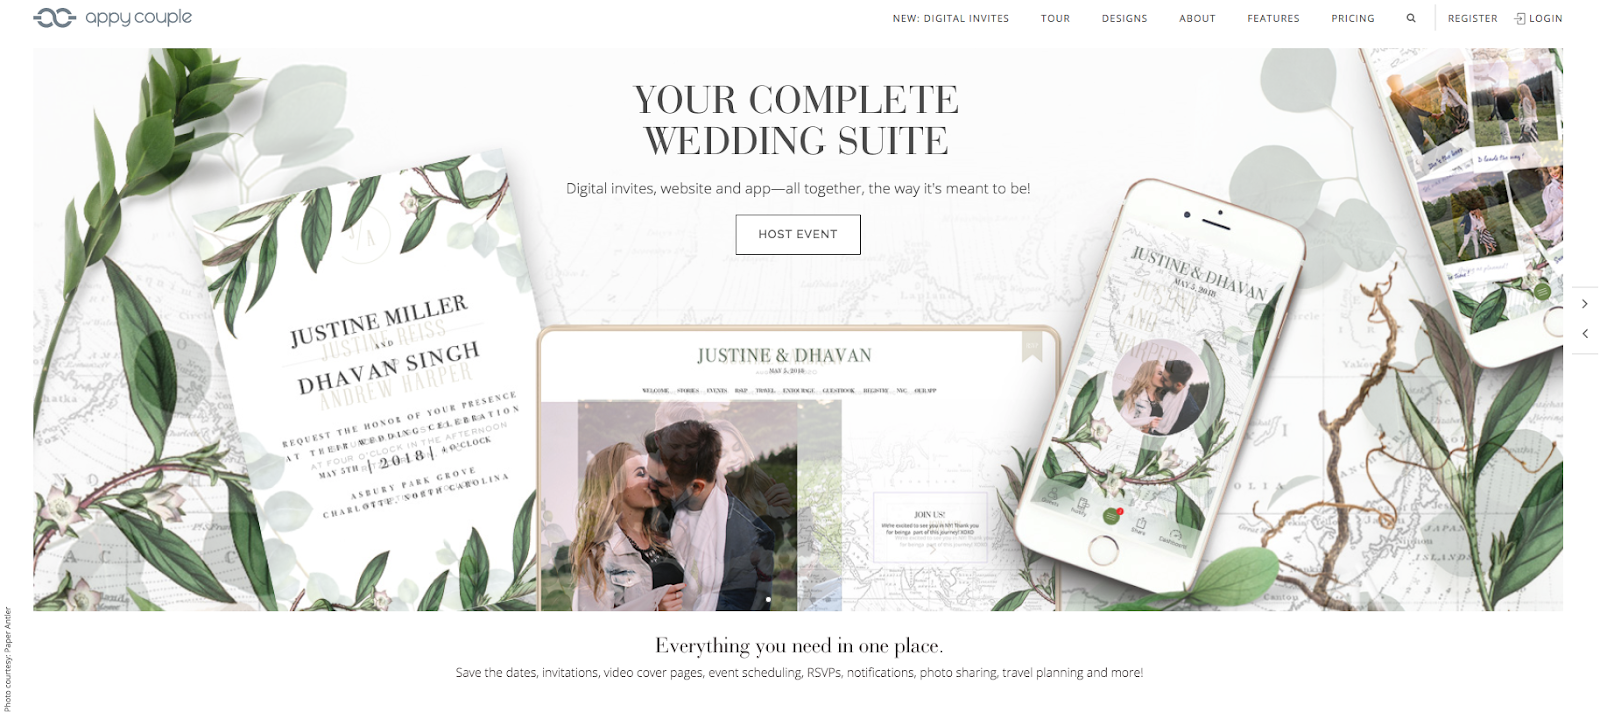 wedding planning tool wedding website appy couple